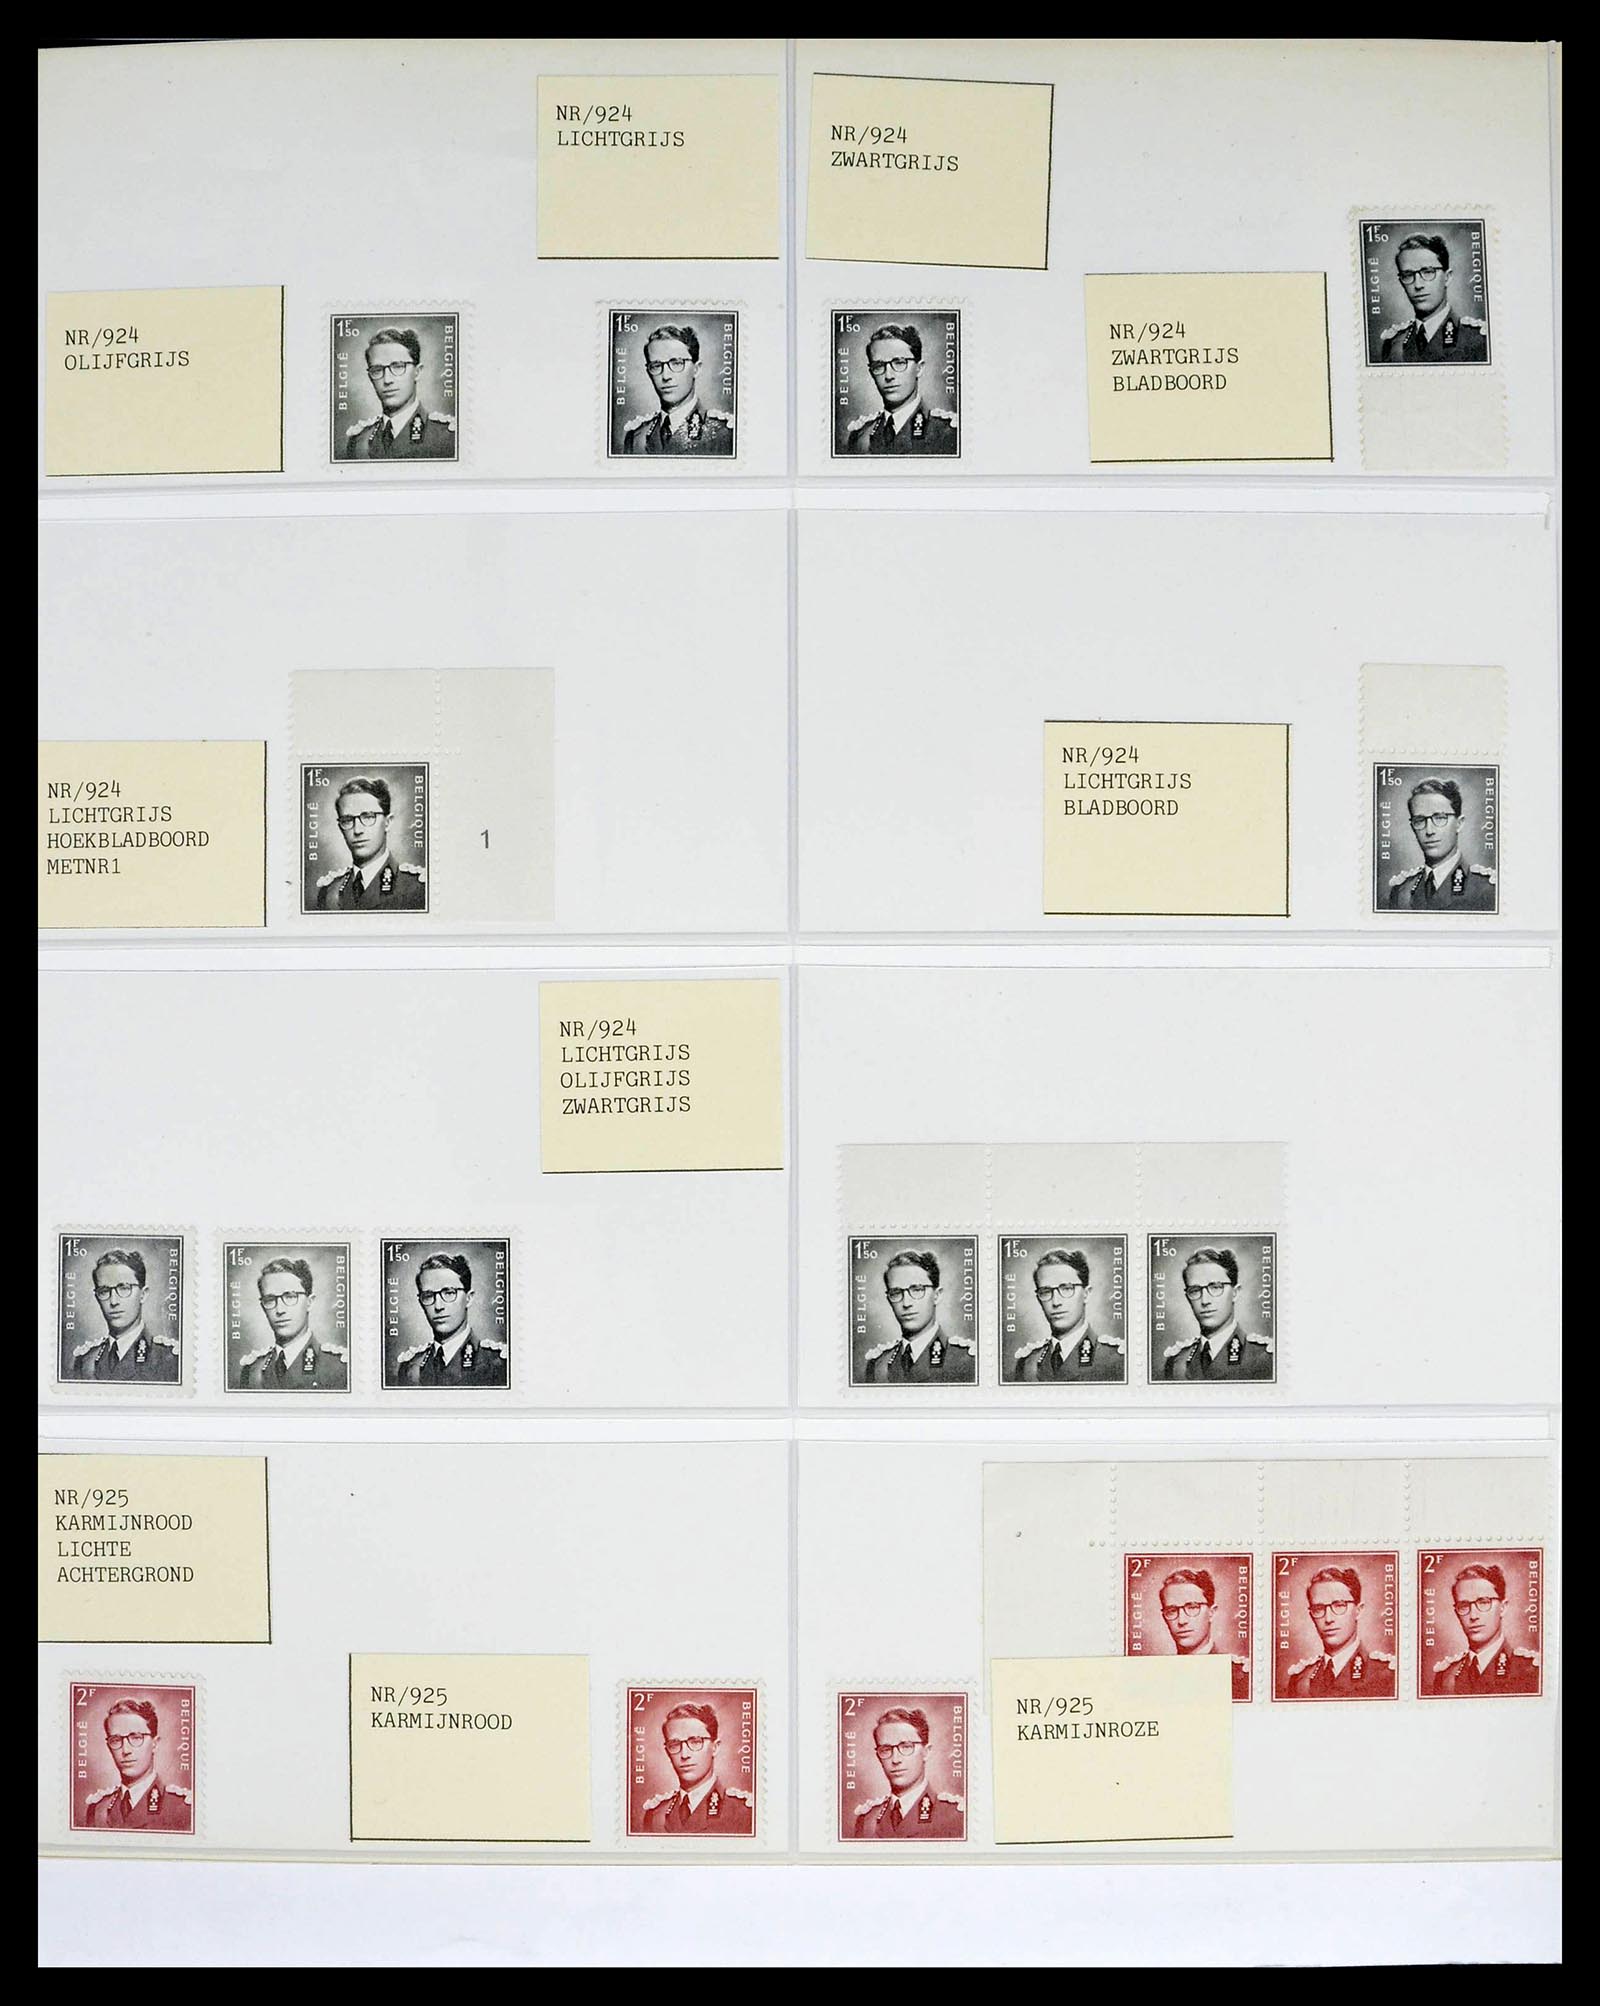 39229 0005 - Stamp collection 39229 Belgium Boudewijn with glasses 1952-1975.